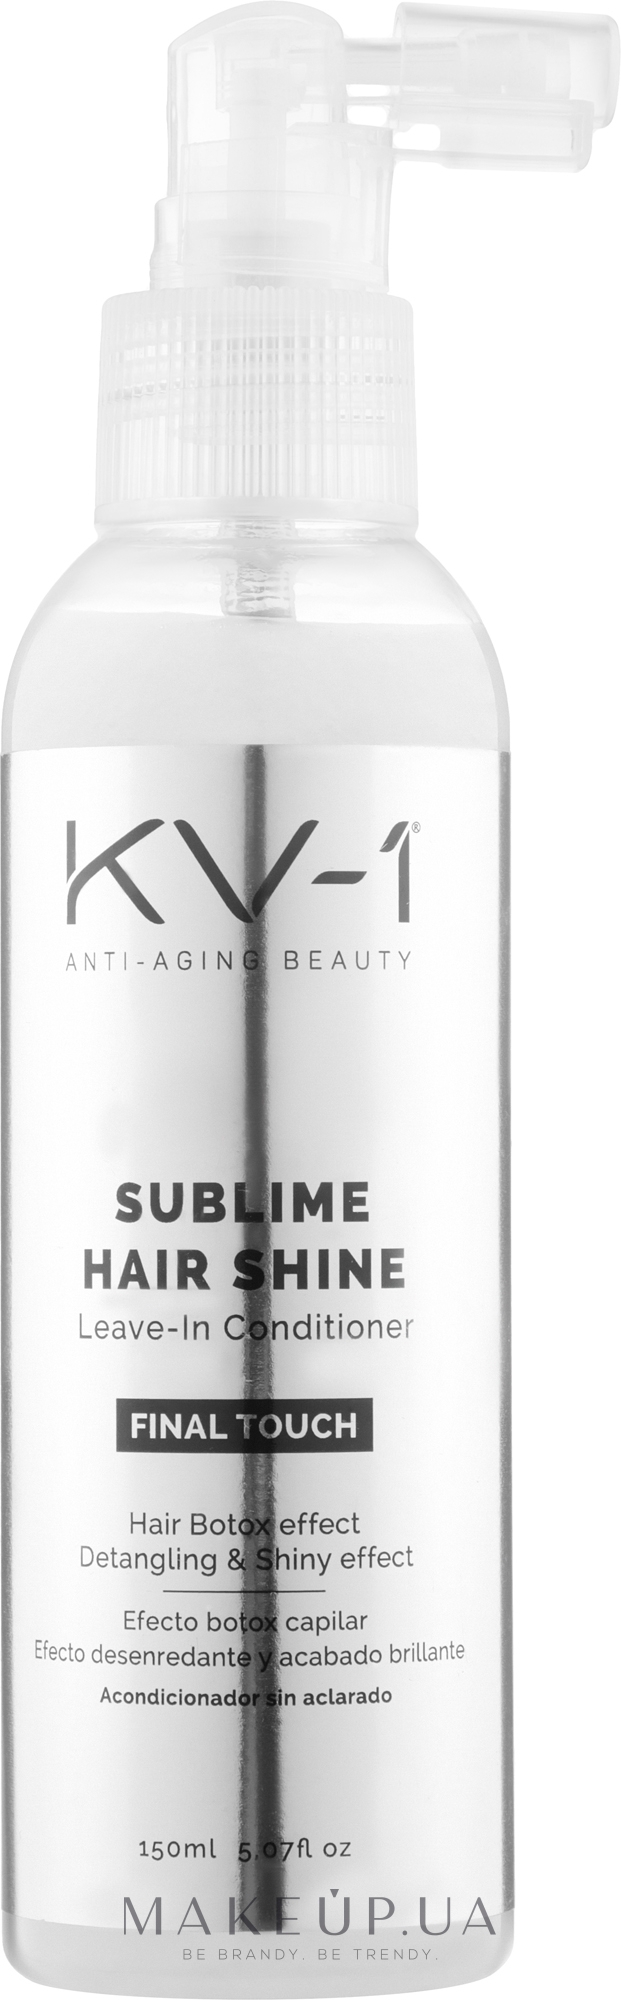 Спрей-кондиционер для волос с эффектом ботокса - KV-1 Final Touch Sublime Hair Shine Leave-In Conditioner — фото 150ml